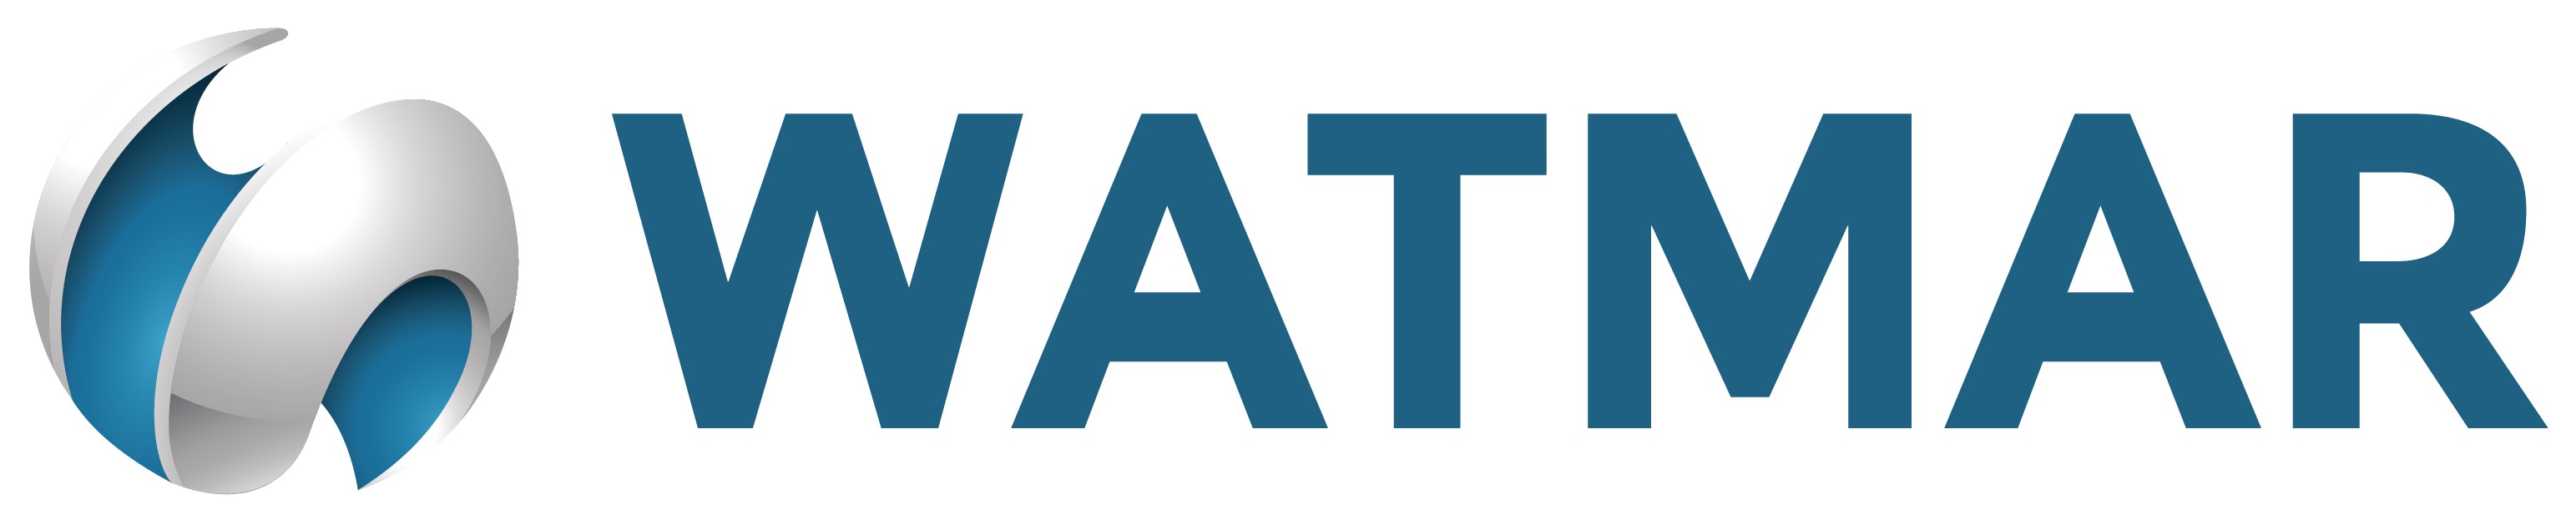 Watmar logo